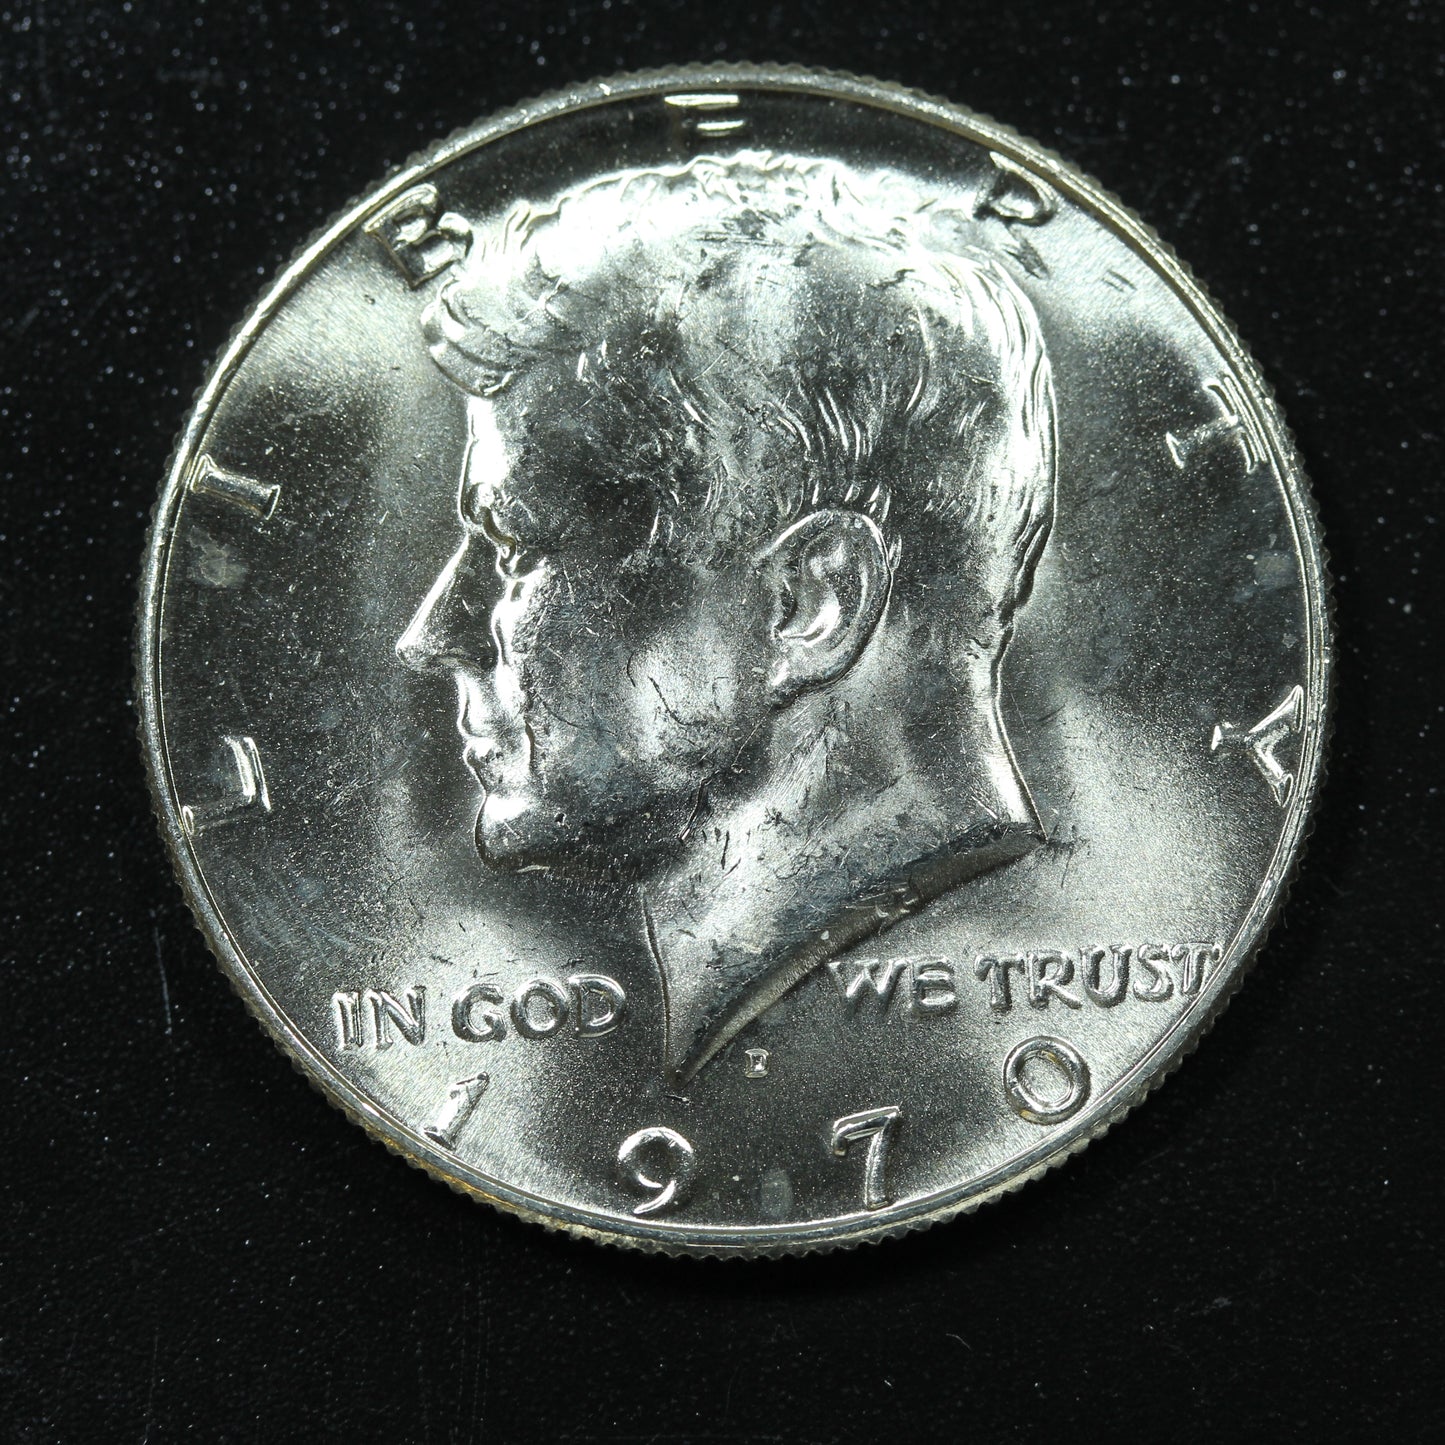 1970 D (Denver) Kennedy Half Dollar 40% Silver